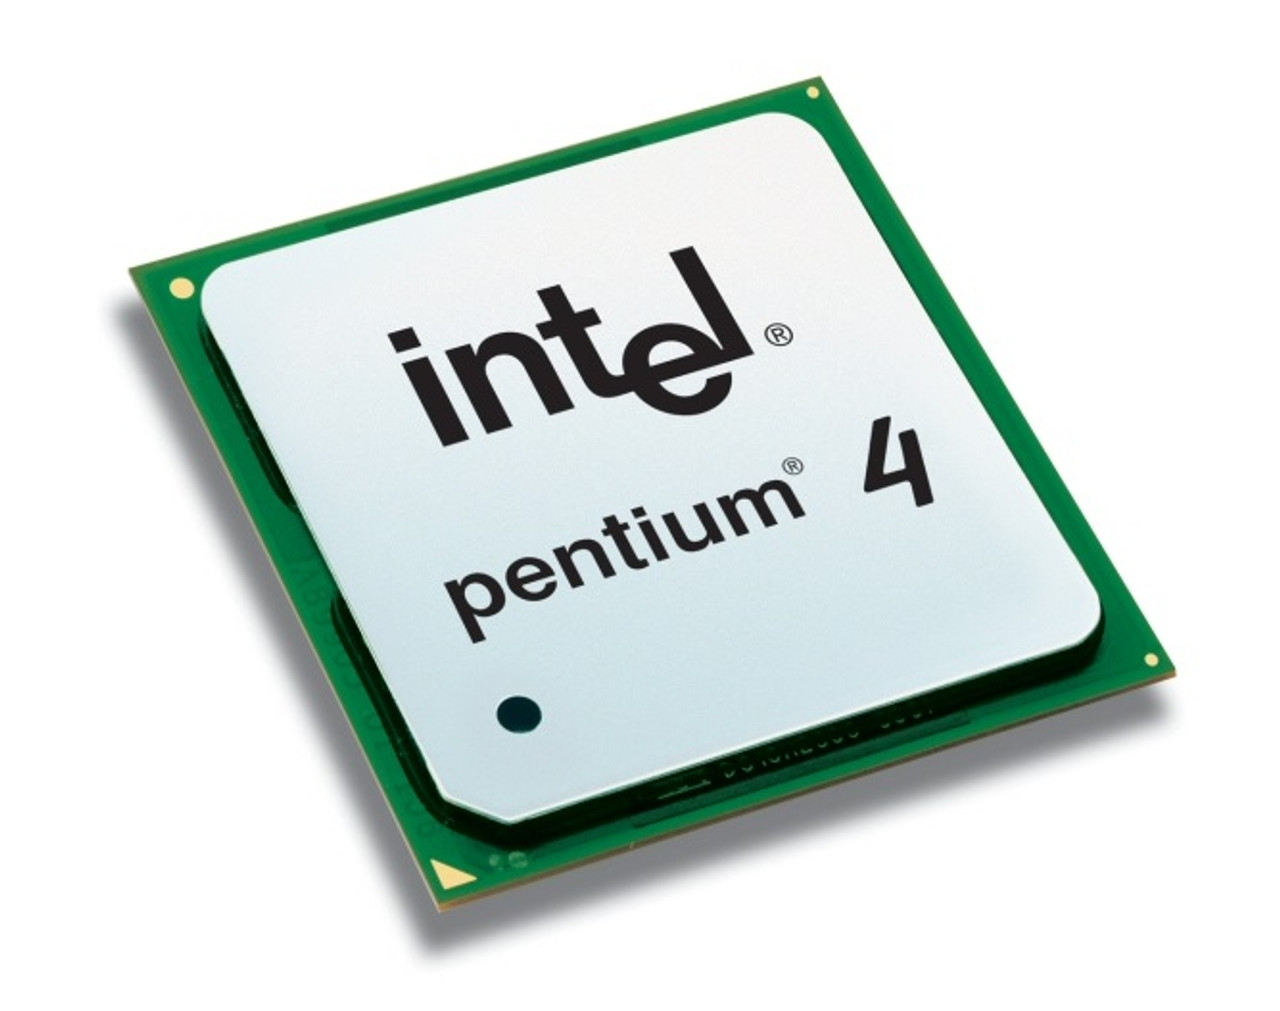 P8605 - Dell 2.6GHz 800MHz FSB 1MB L2 Cache Intel Pentium 4 560J Processor